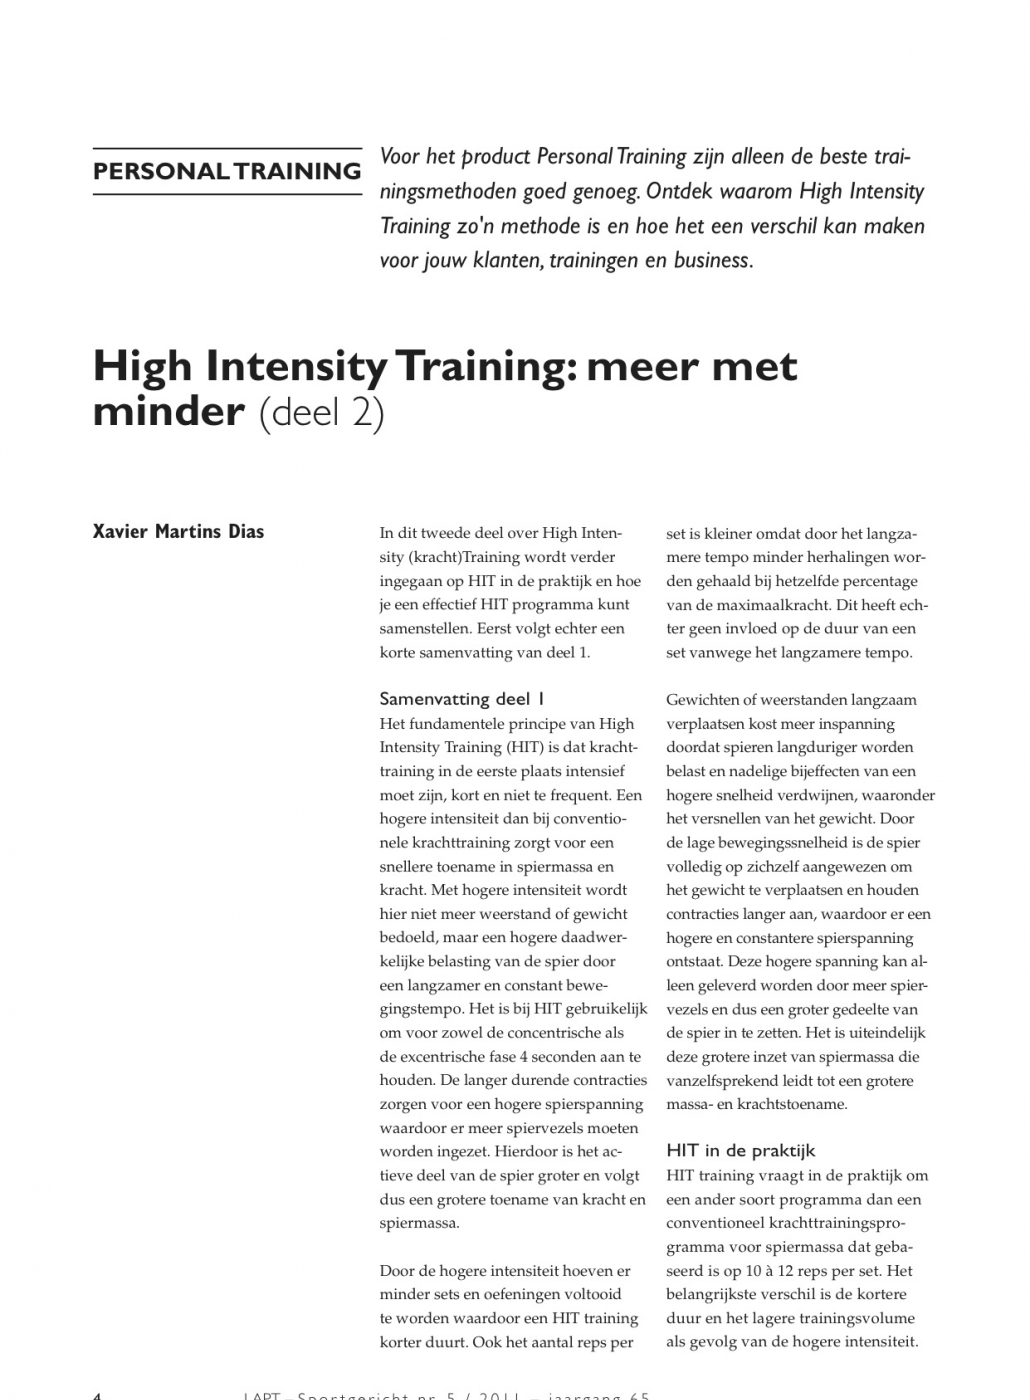 High intensity training: meer met minder (deel 2)